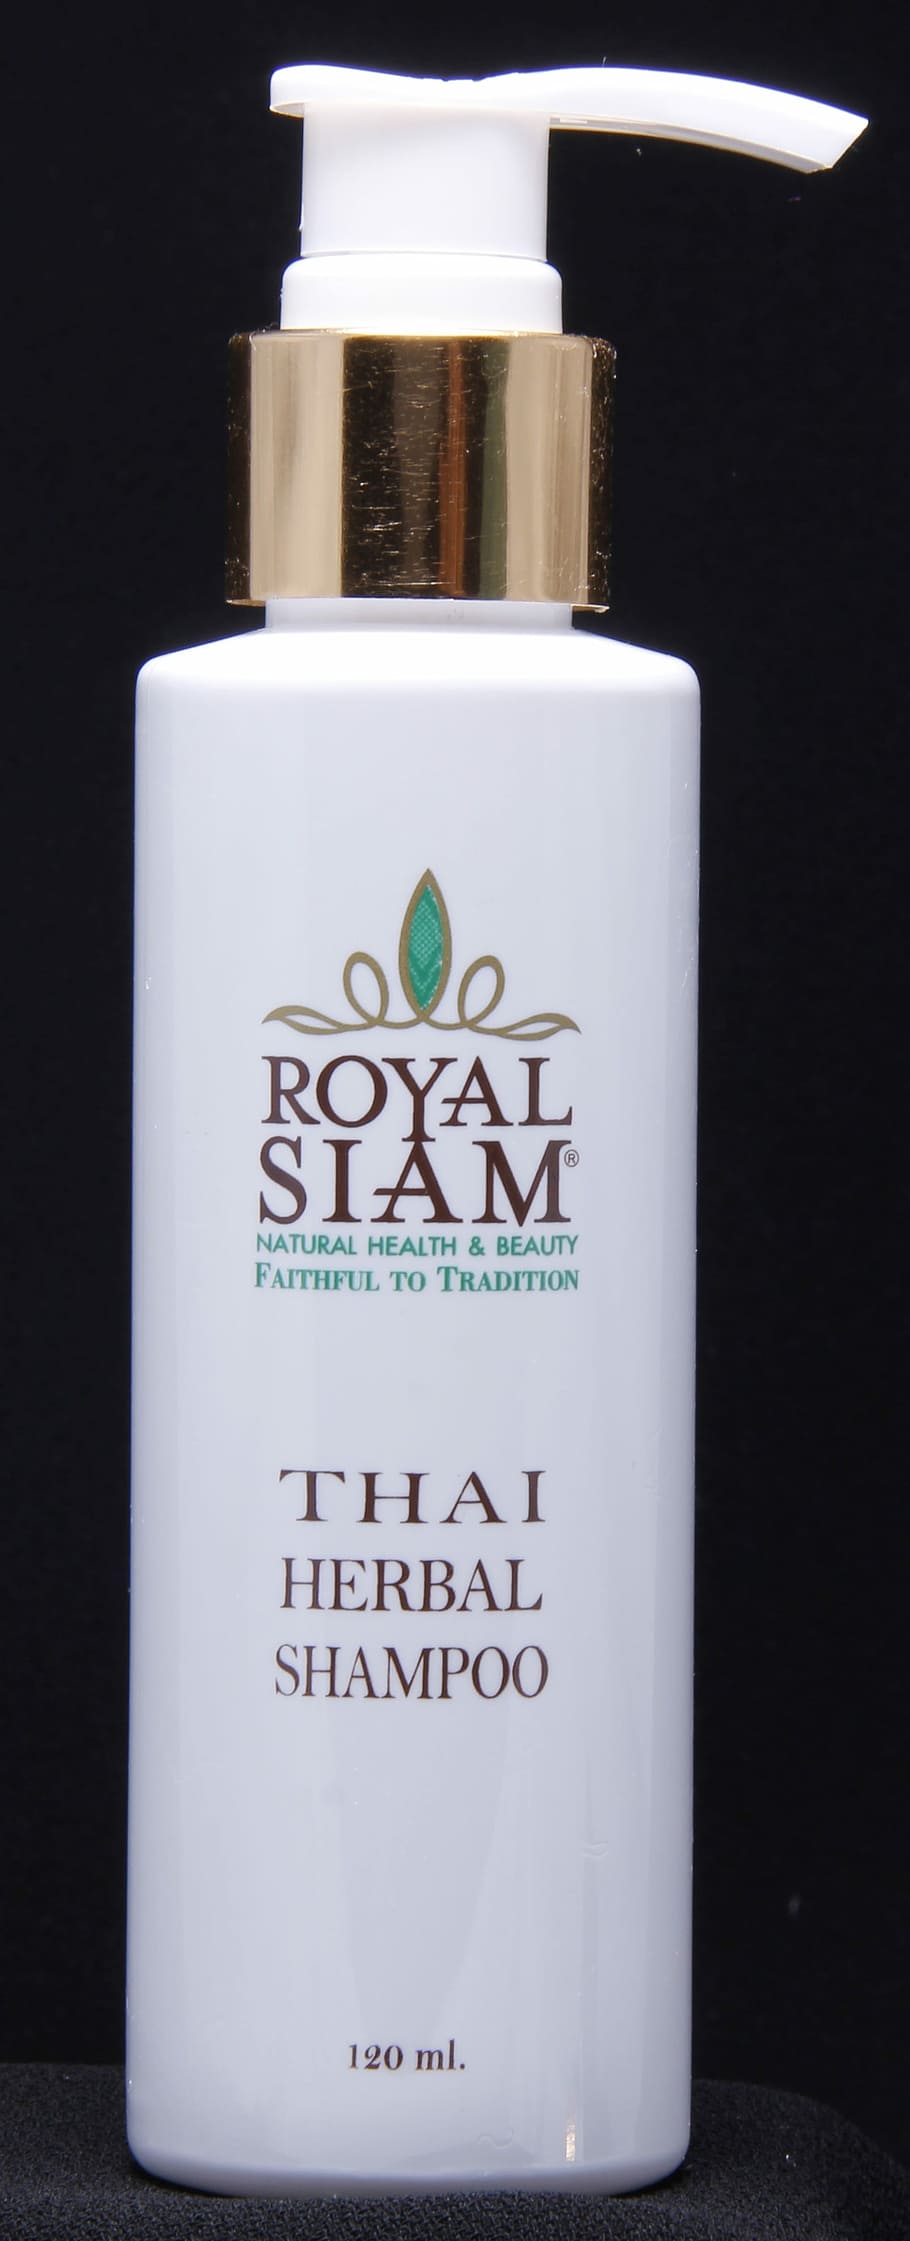 shampoo, thai shampoo, Shampoo, Thai, thai shampoo, thai herbal shampoo, kaffir lime shampoo, royal siam, bottle, black background, studio shot